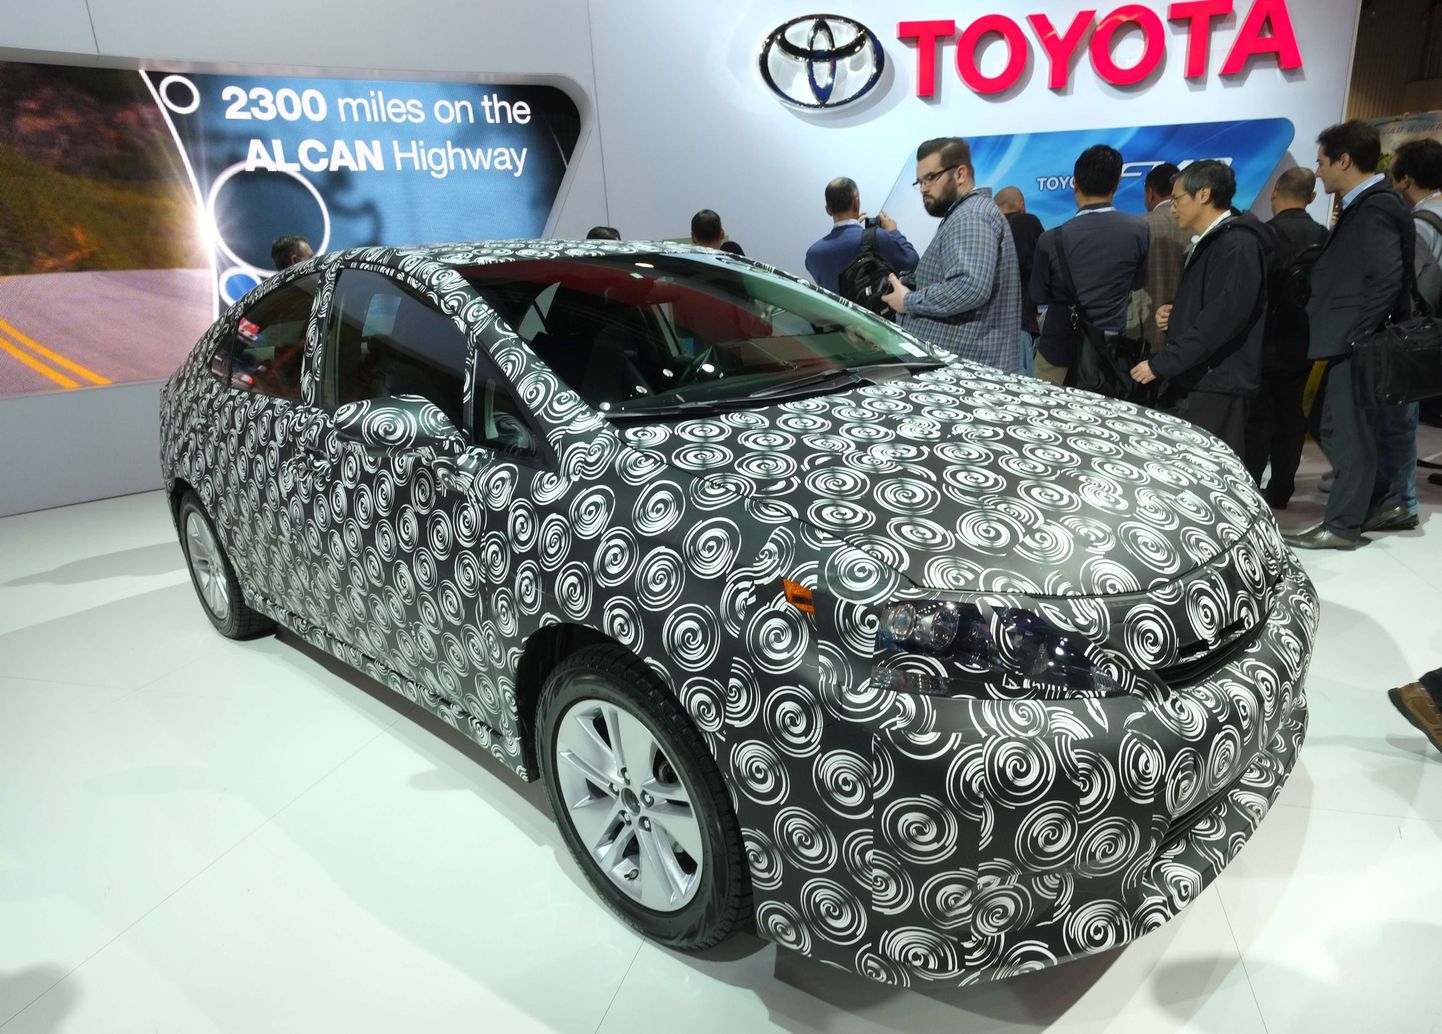 Toyota vesinikauto CES messil